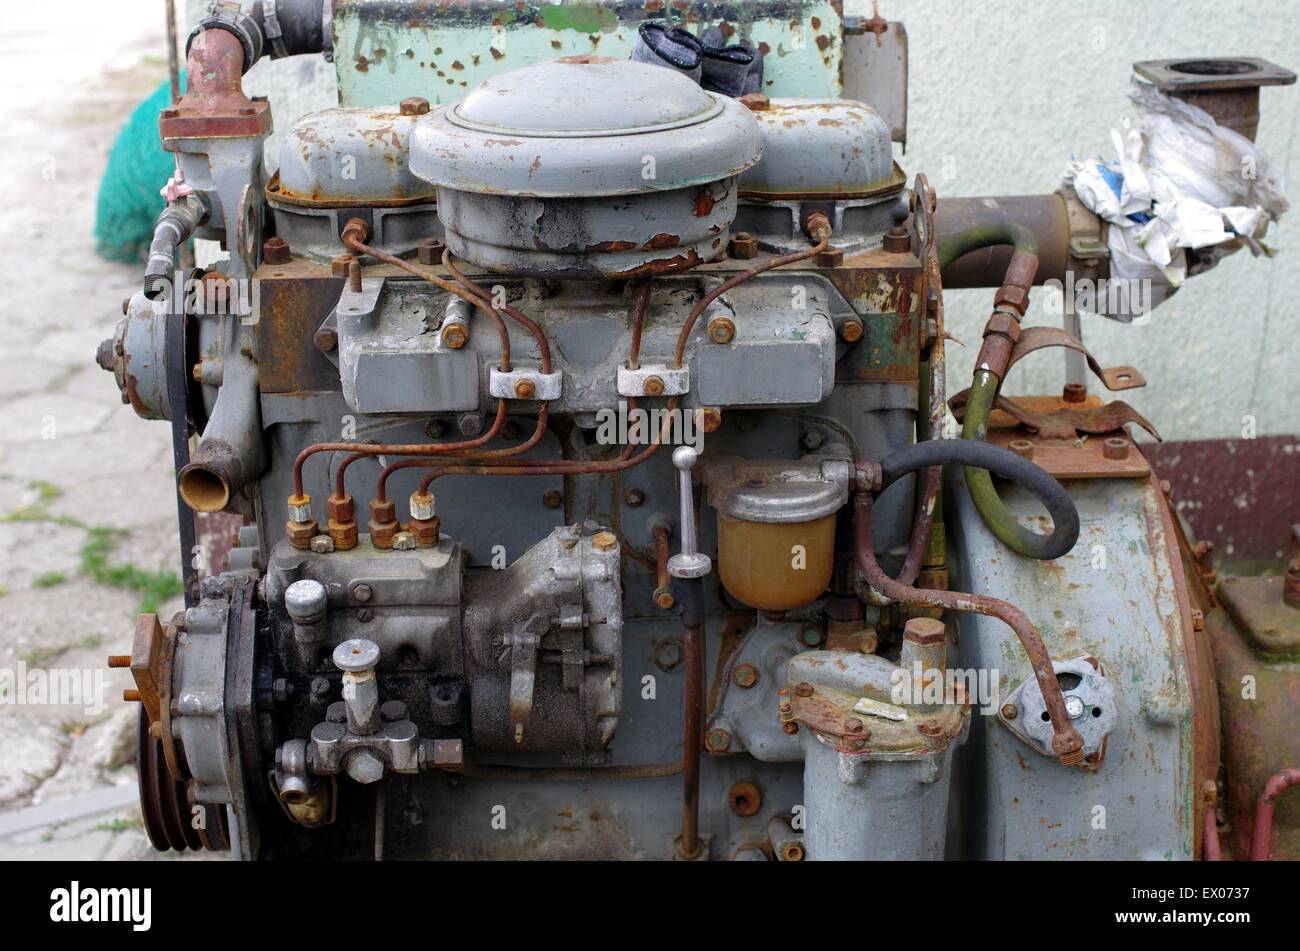 old rusty diesel engine Stock Photo